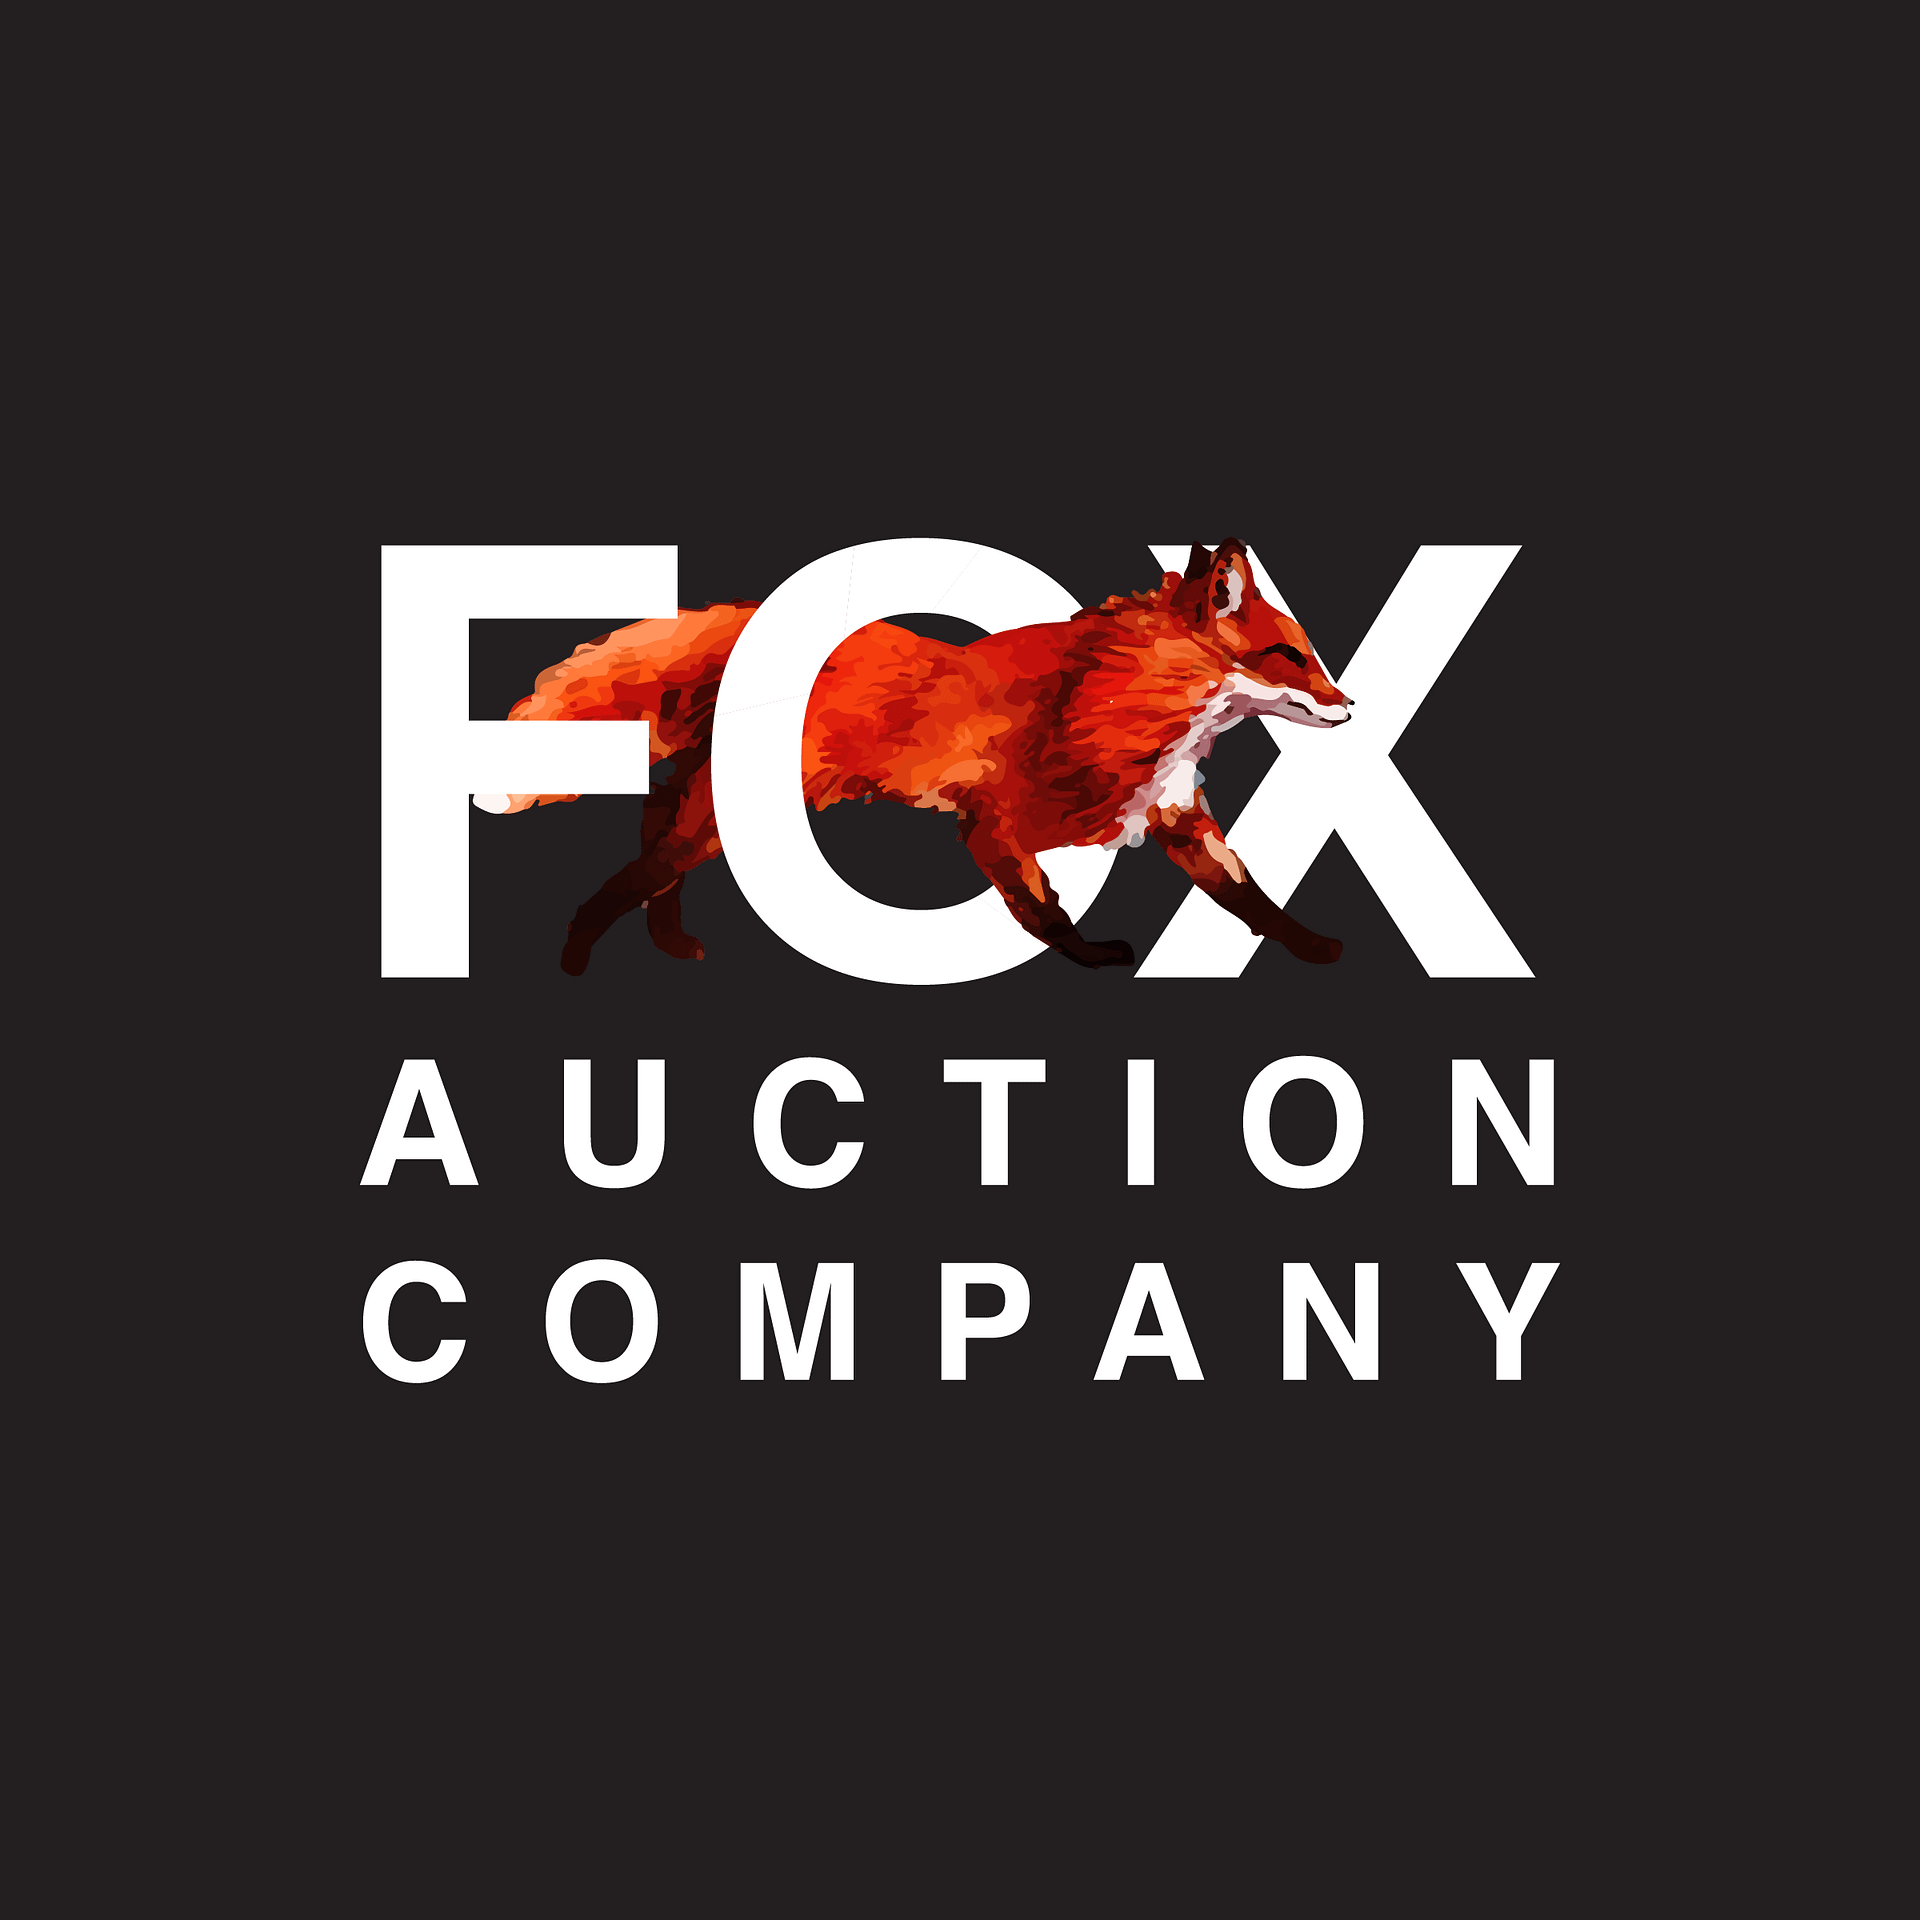 Fox Auction Co